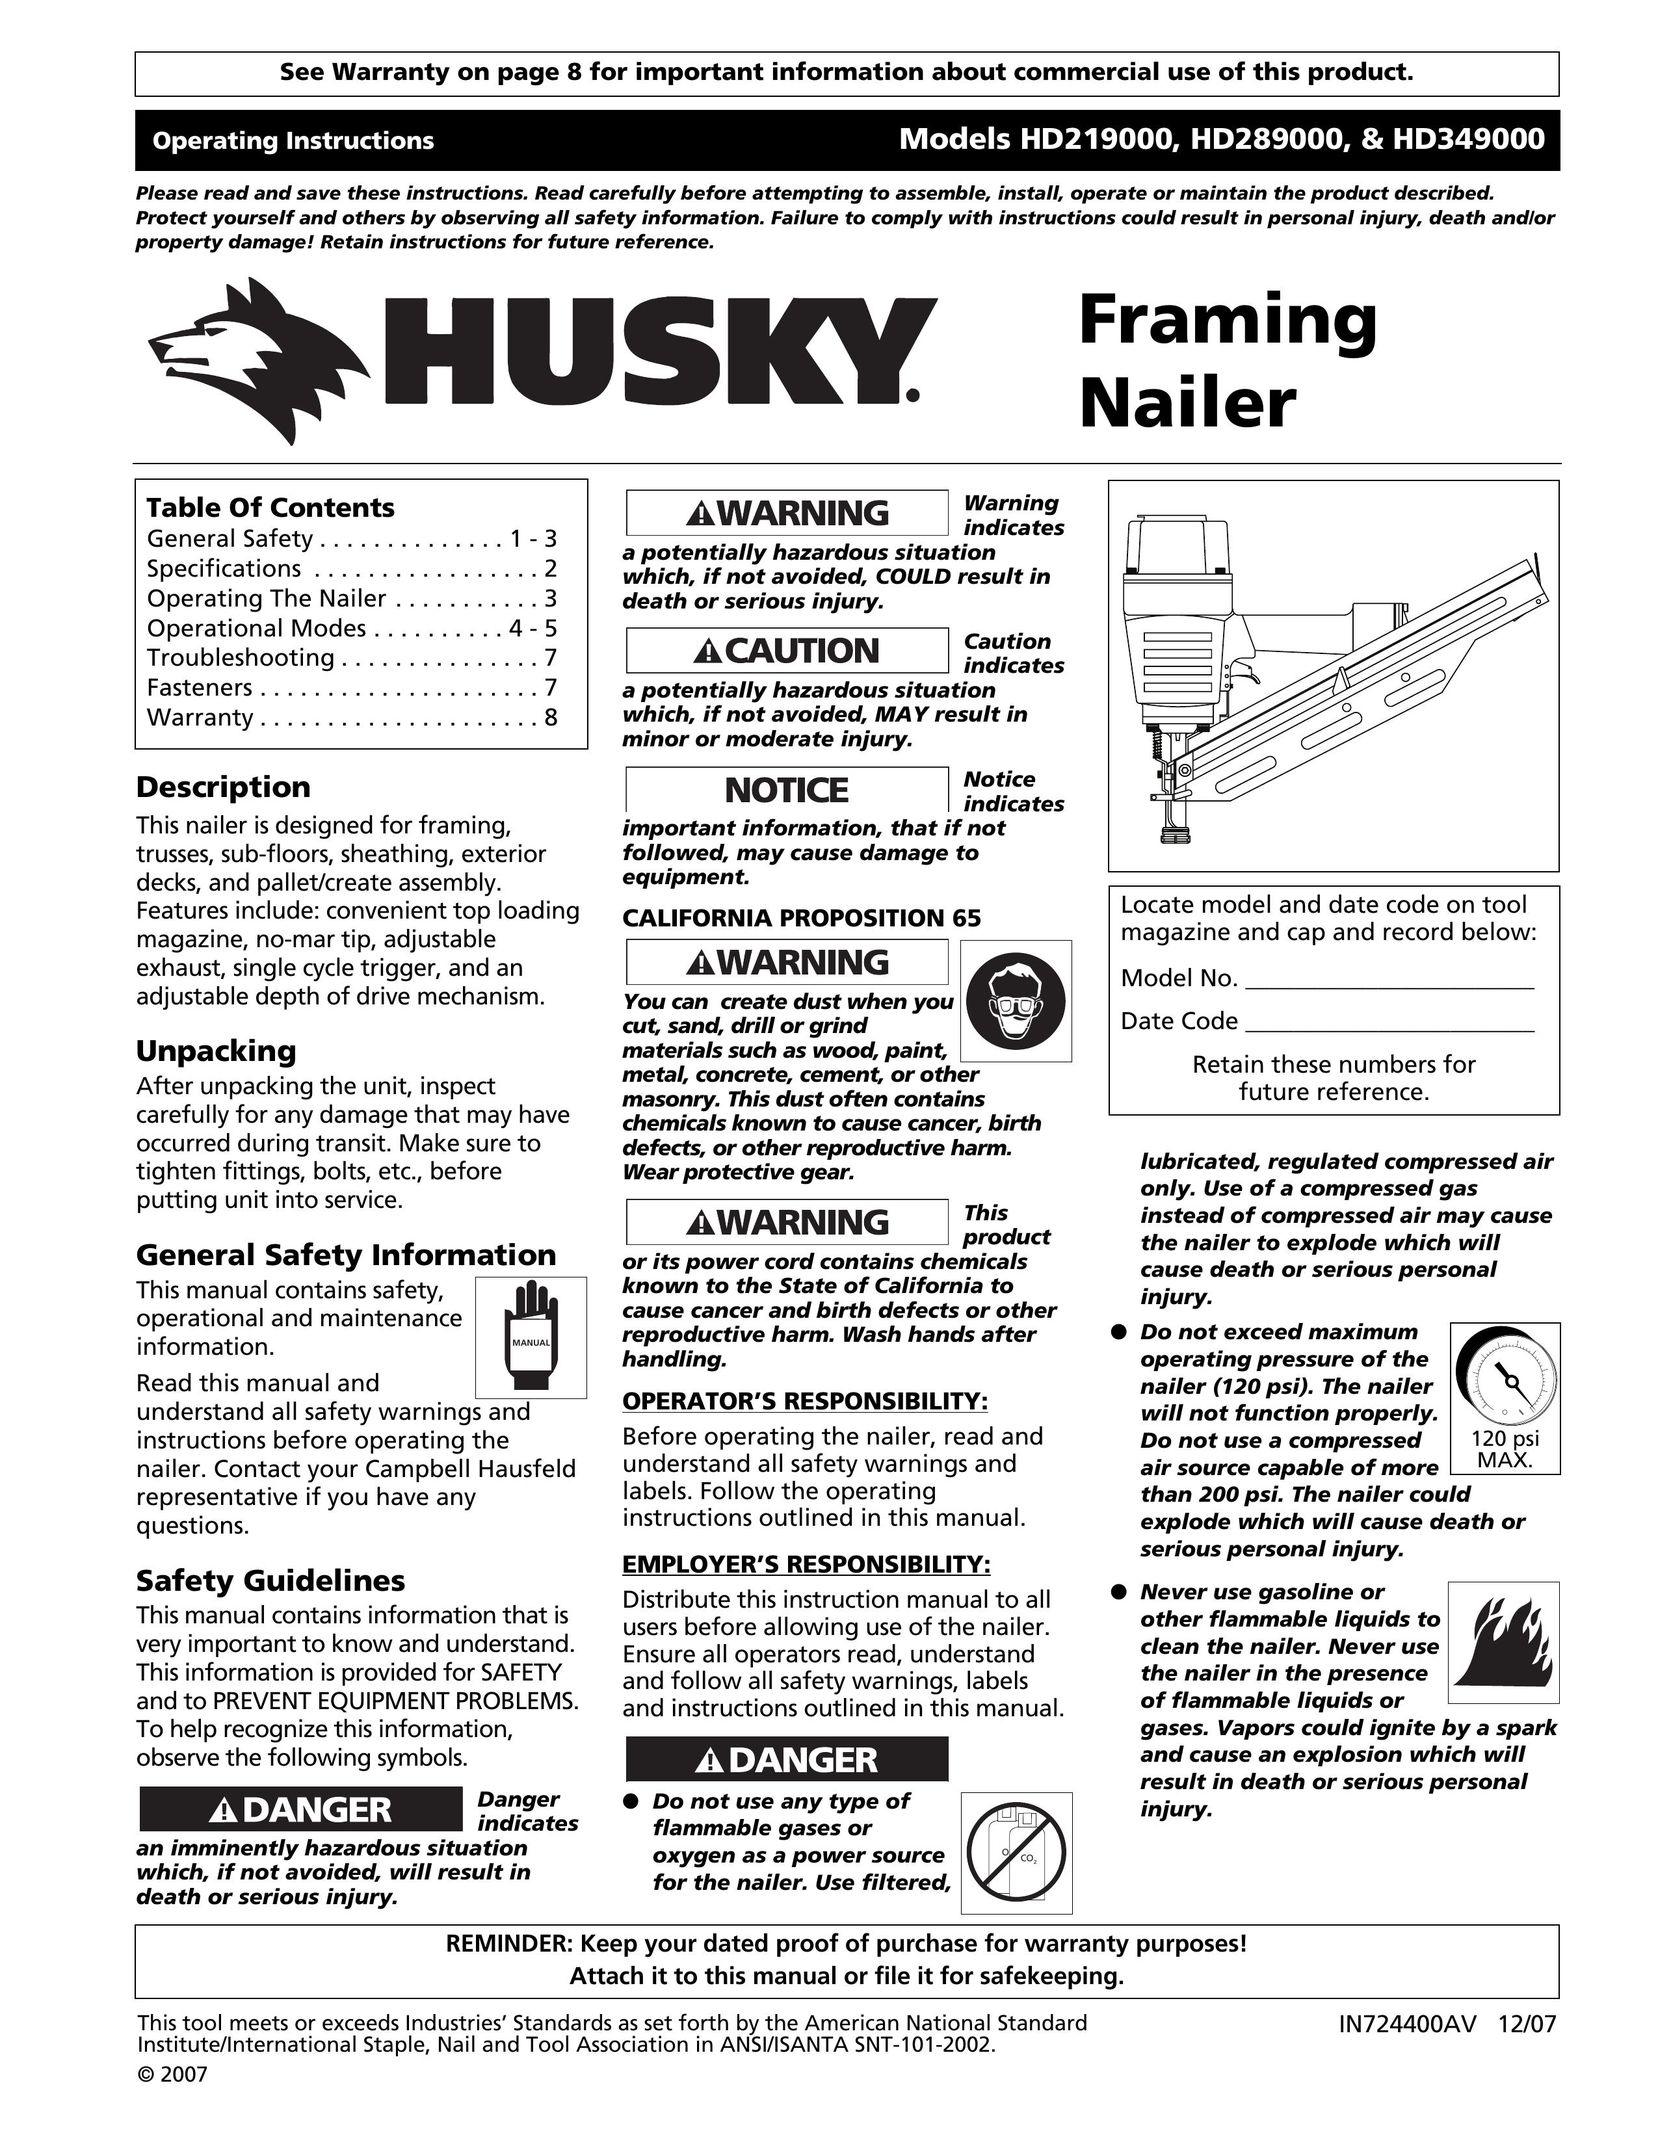 Husky HD219000 Nail Gun User Manual